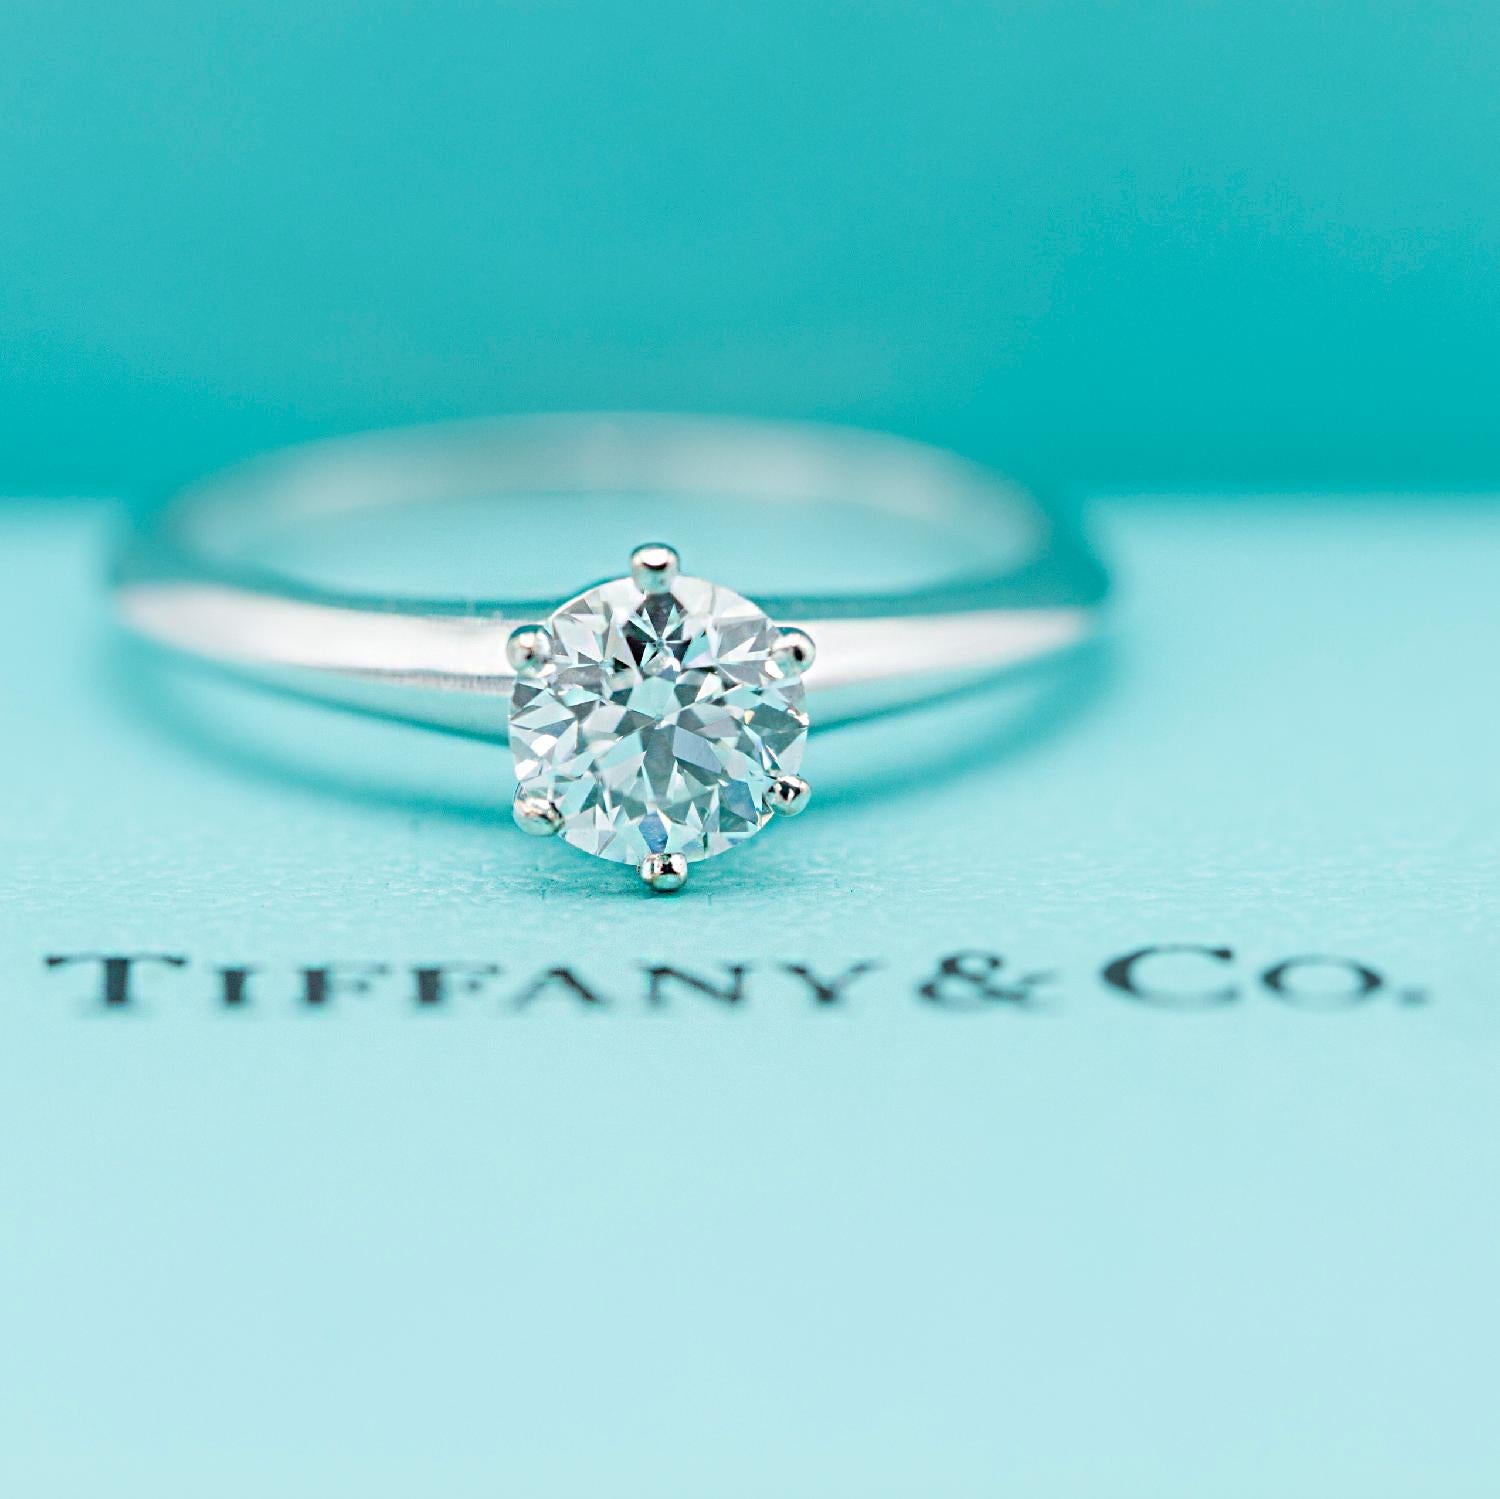 Tiffany & Co.
Style: Solitaire
Metal:  Platinum PT950
Size: 6.5  - sizable  
Total Carat Weight:  0.77 TCW 
Diamond Shape: Round Brilliant
Diamond Color & Clarity: H / VVS2
Hallmark: 